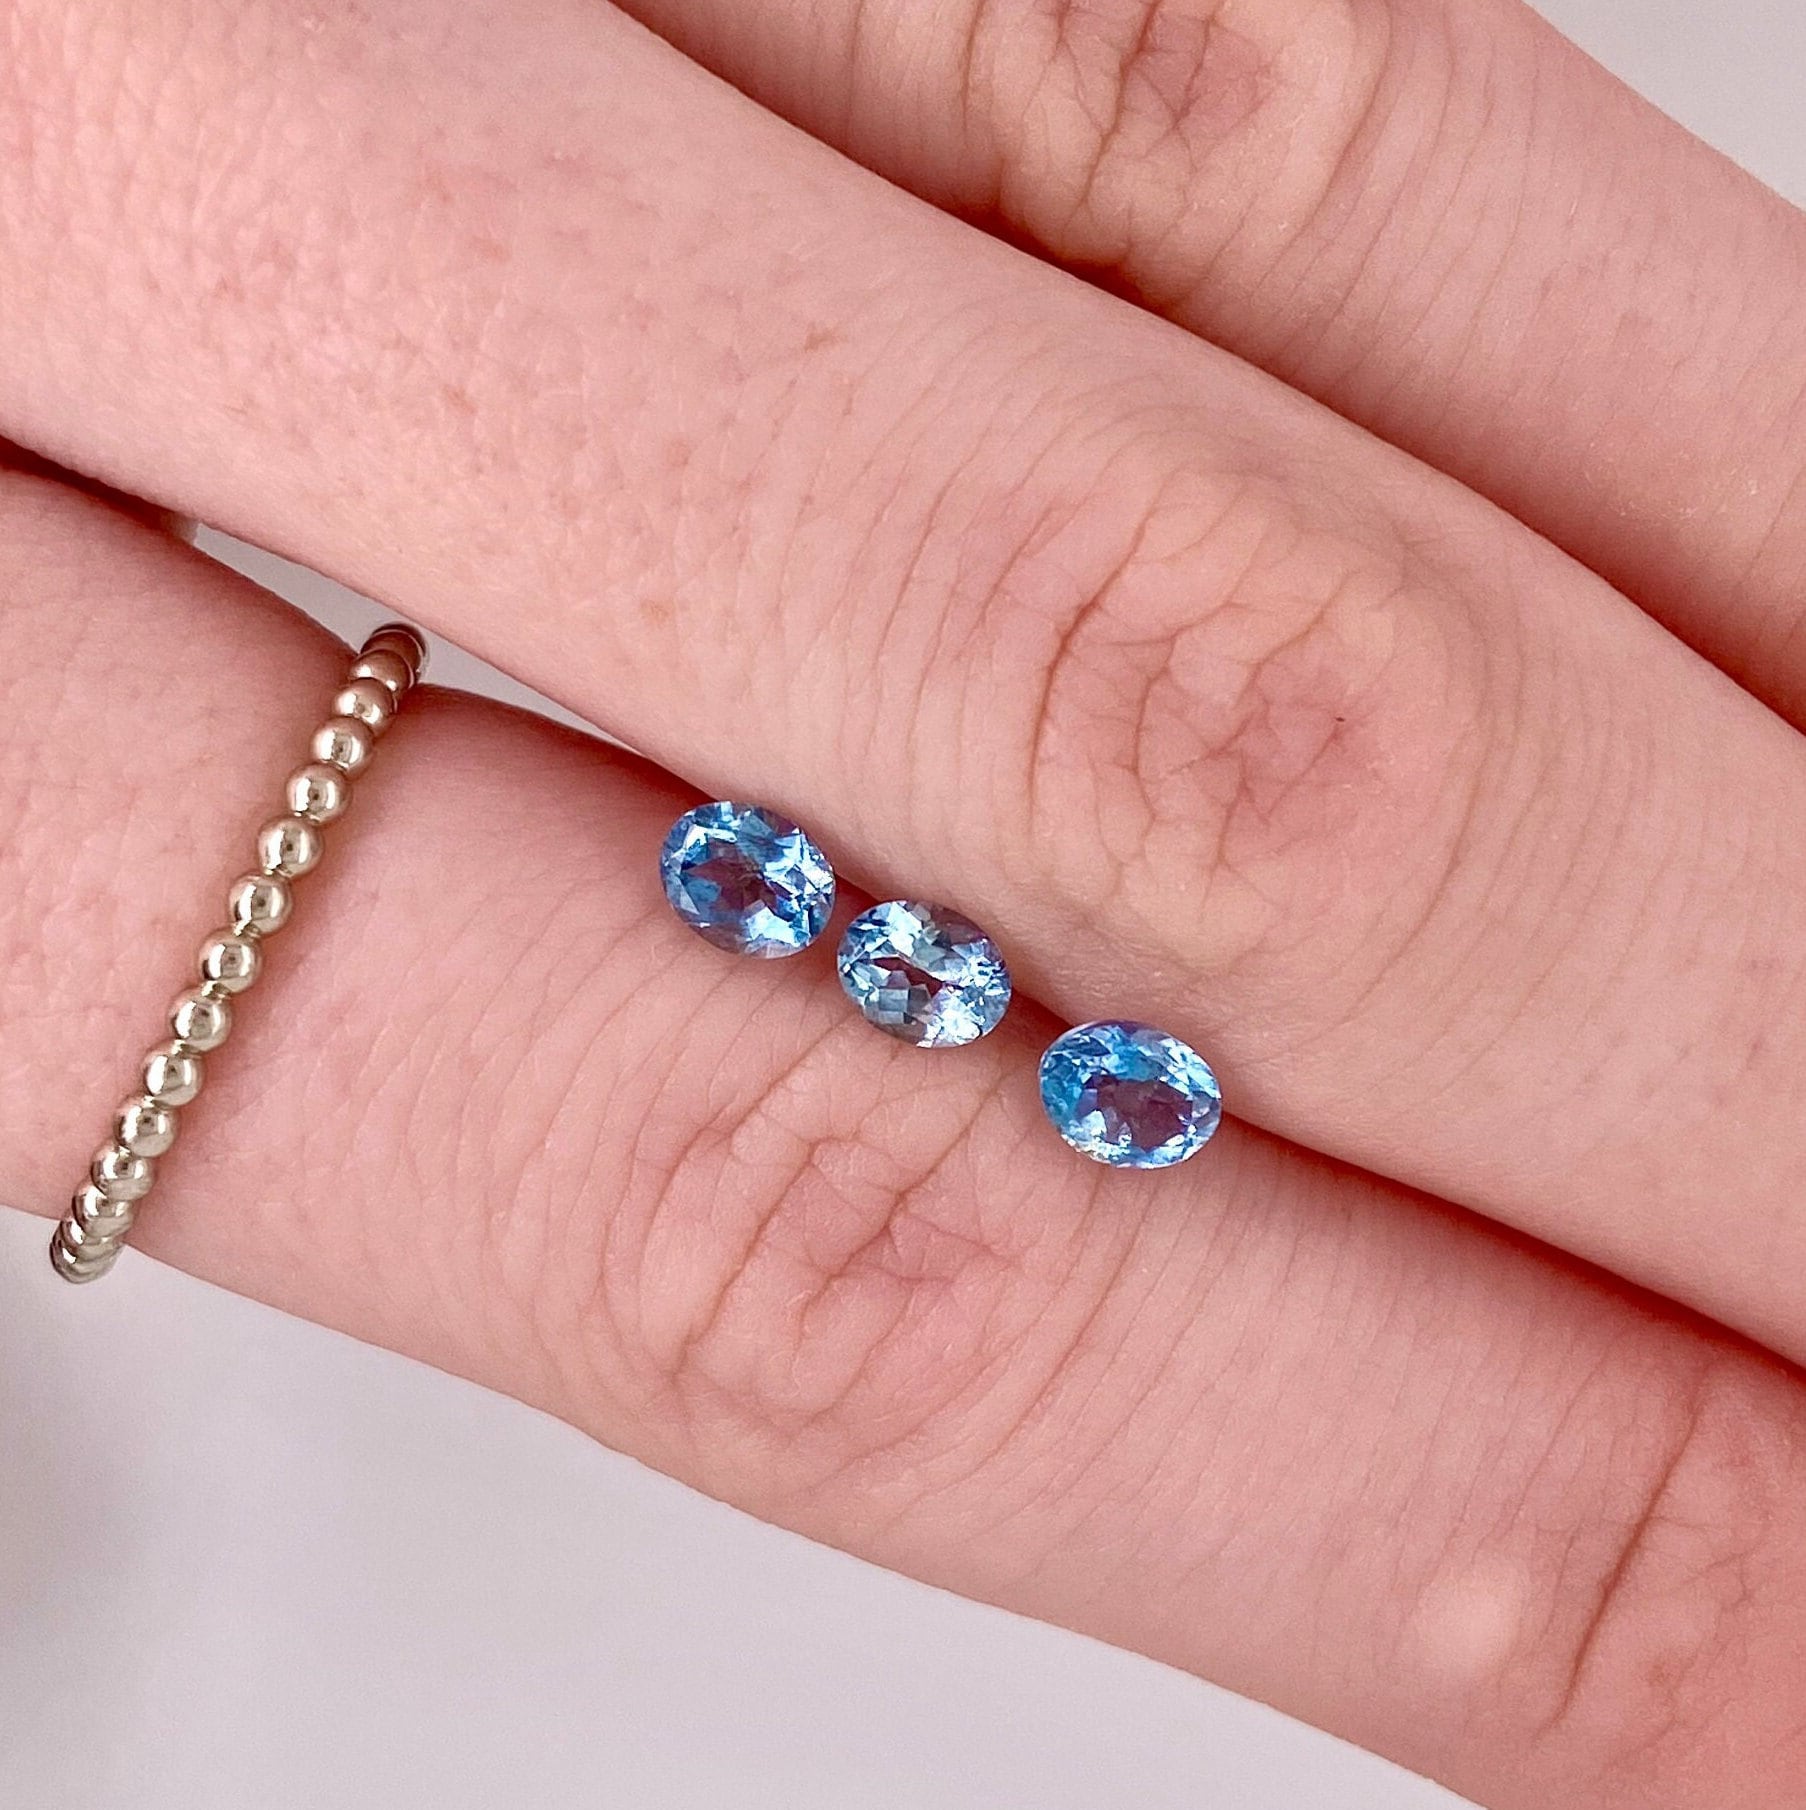 Gemstones-Certified Aquamarine Loose Gemstone | Oval Shape 6x4mm | March Birthstone | Matched Pair | Natural Aqua Gem | Solitaire I Stone Setting - NNJGemstones